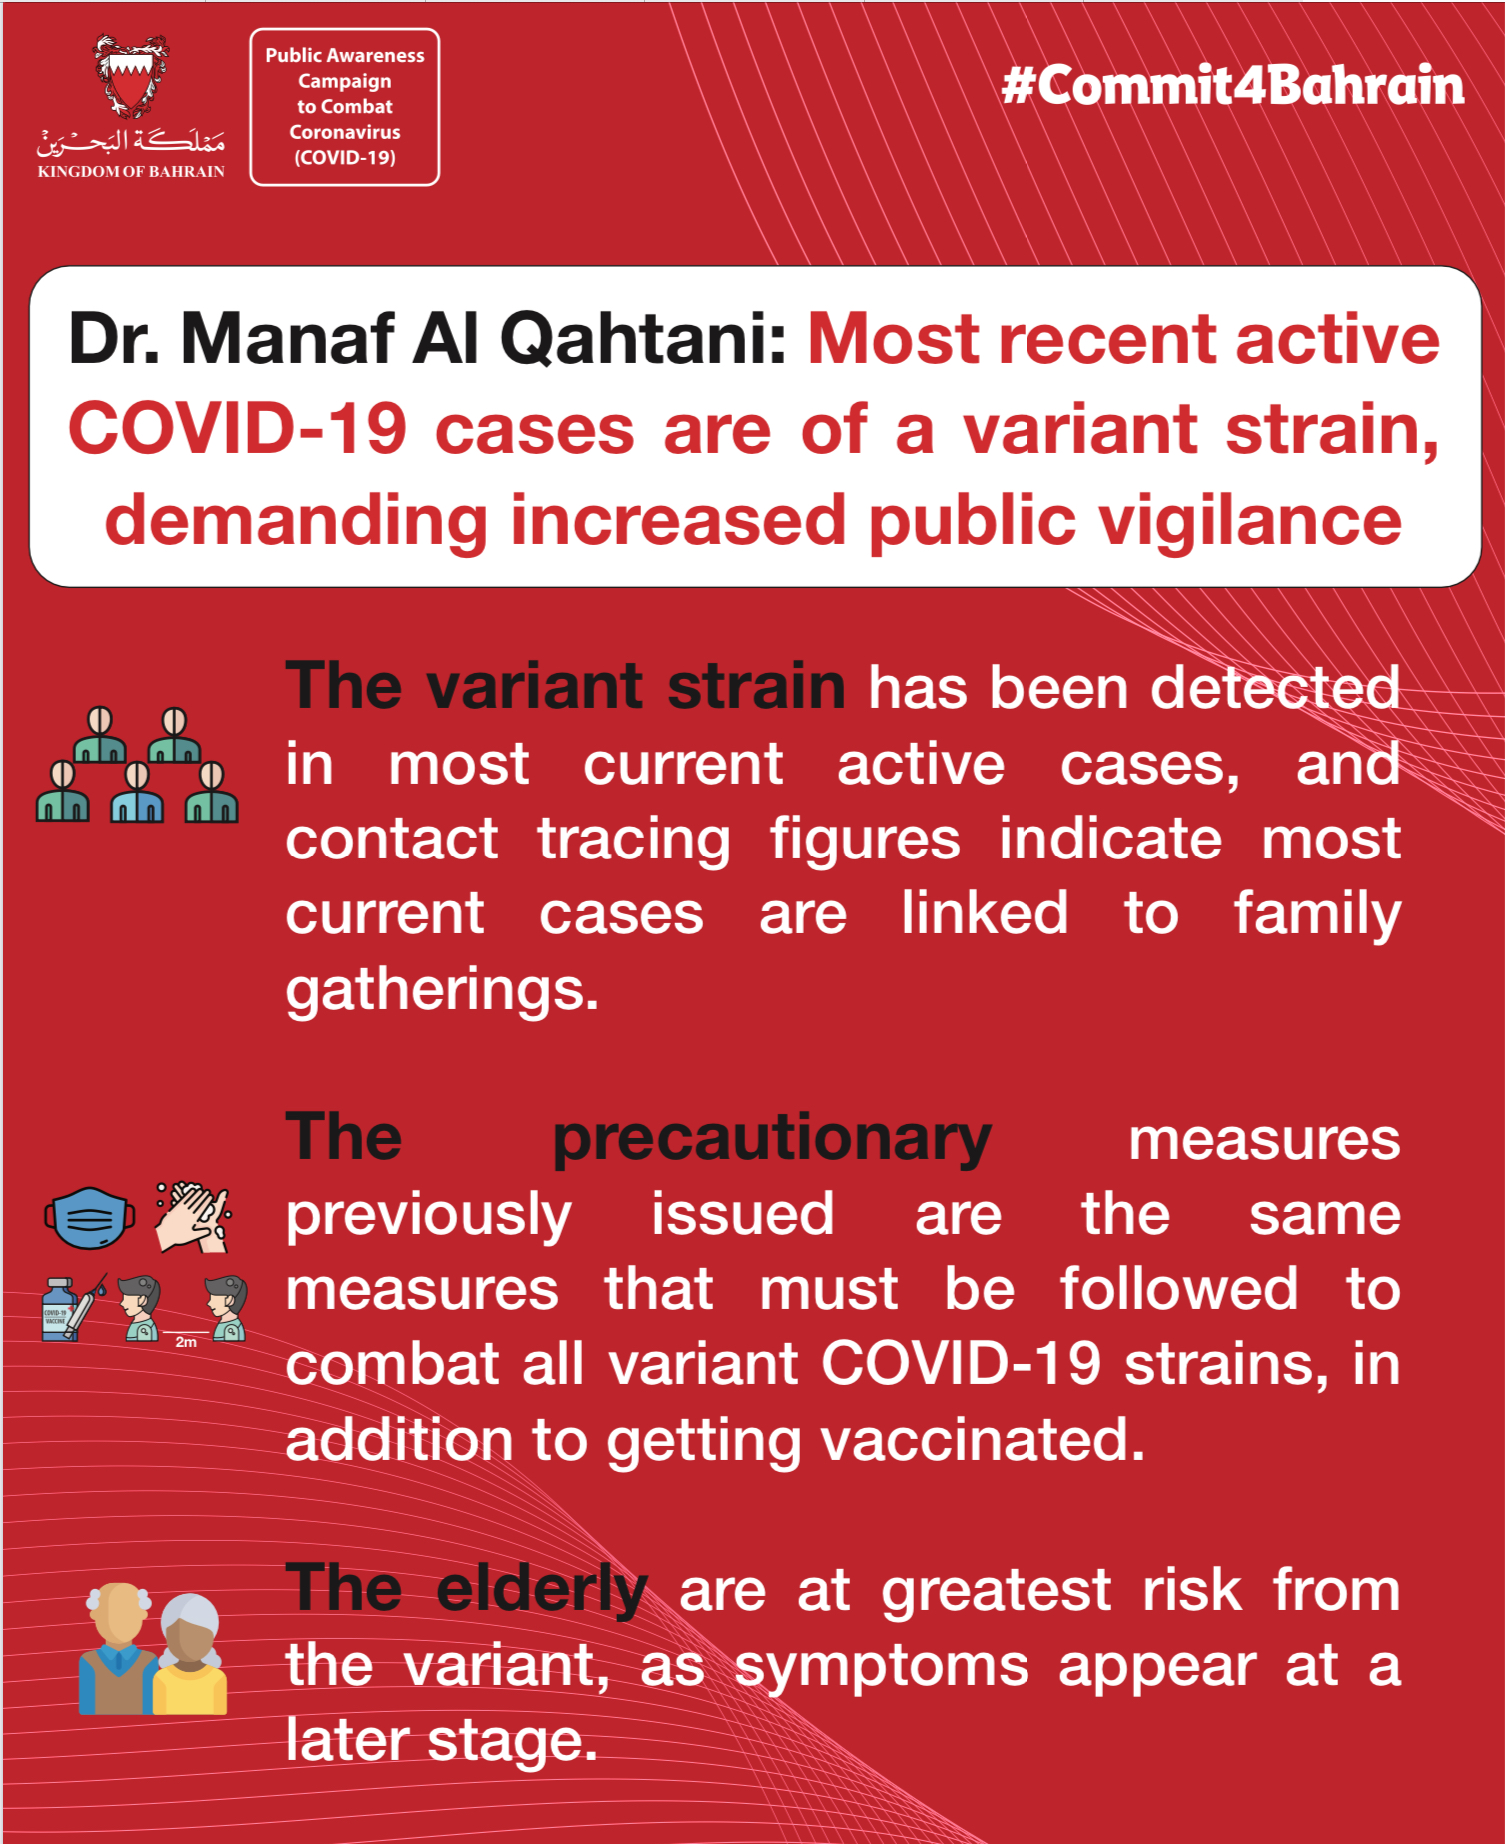 Dr. Al Qahtani: Most recent active COVID-19 cases are of a variant strain, demanding increased public vigilance